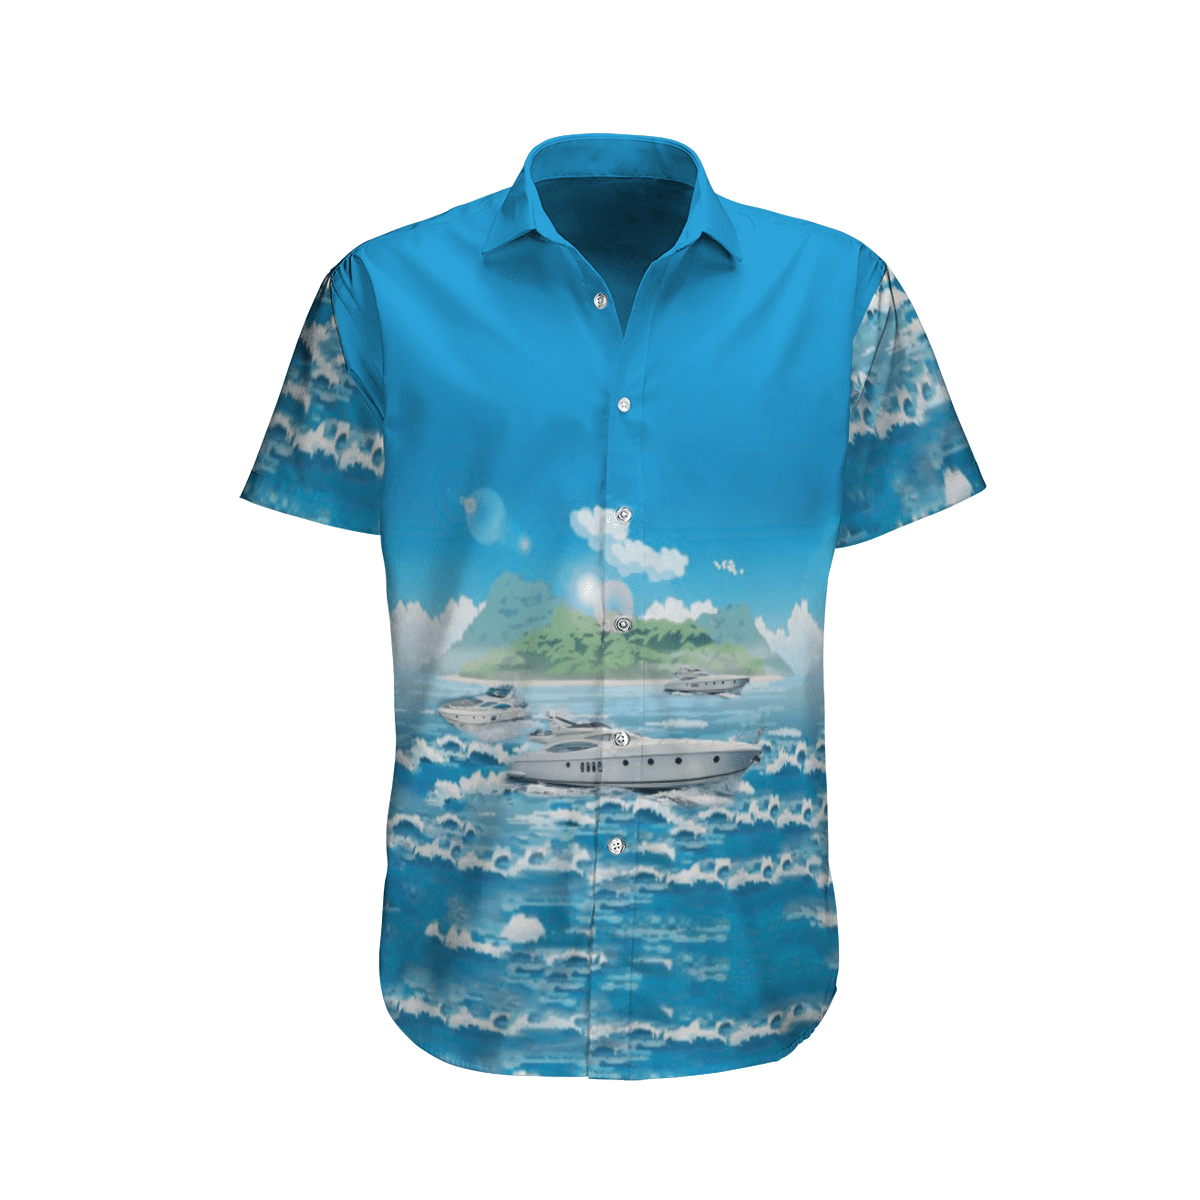 Get a new Hawaiian shirt to enjoy summer vacation 201